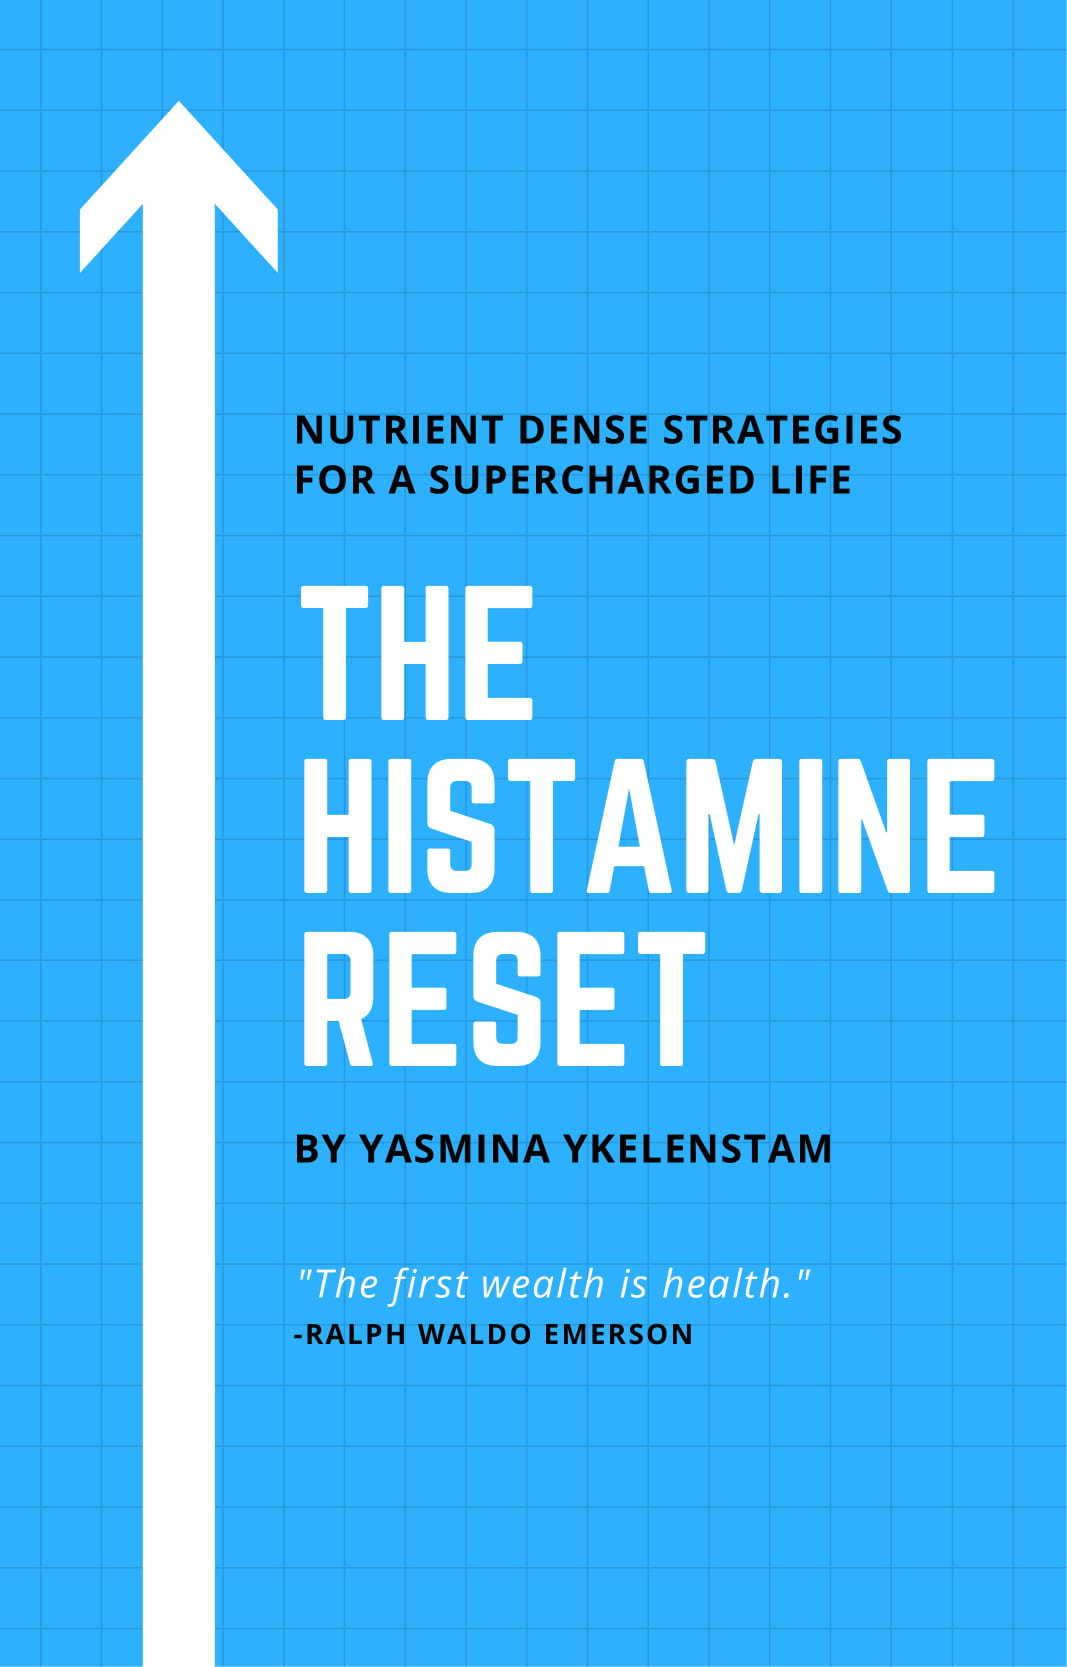 Yasmina Ykelenstam - 28 Day Histamine Reset